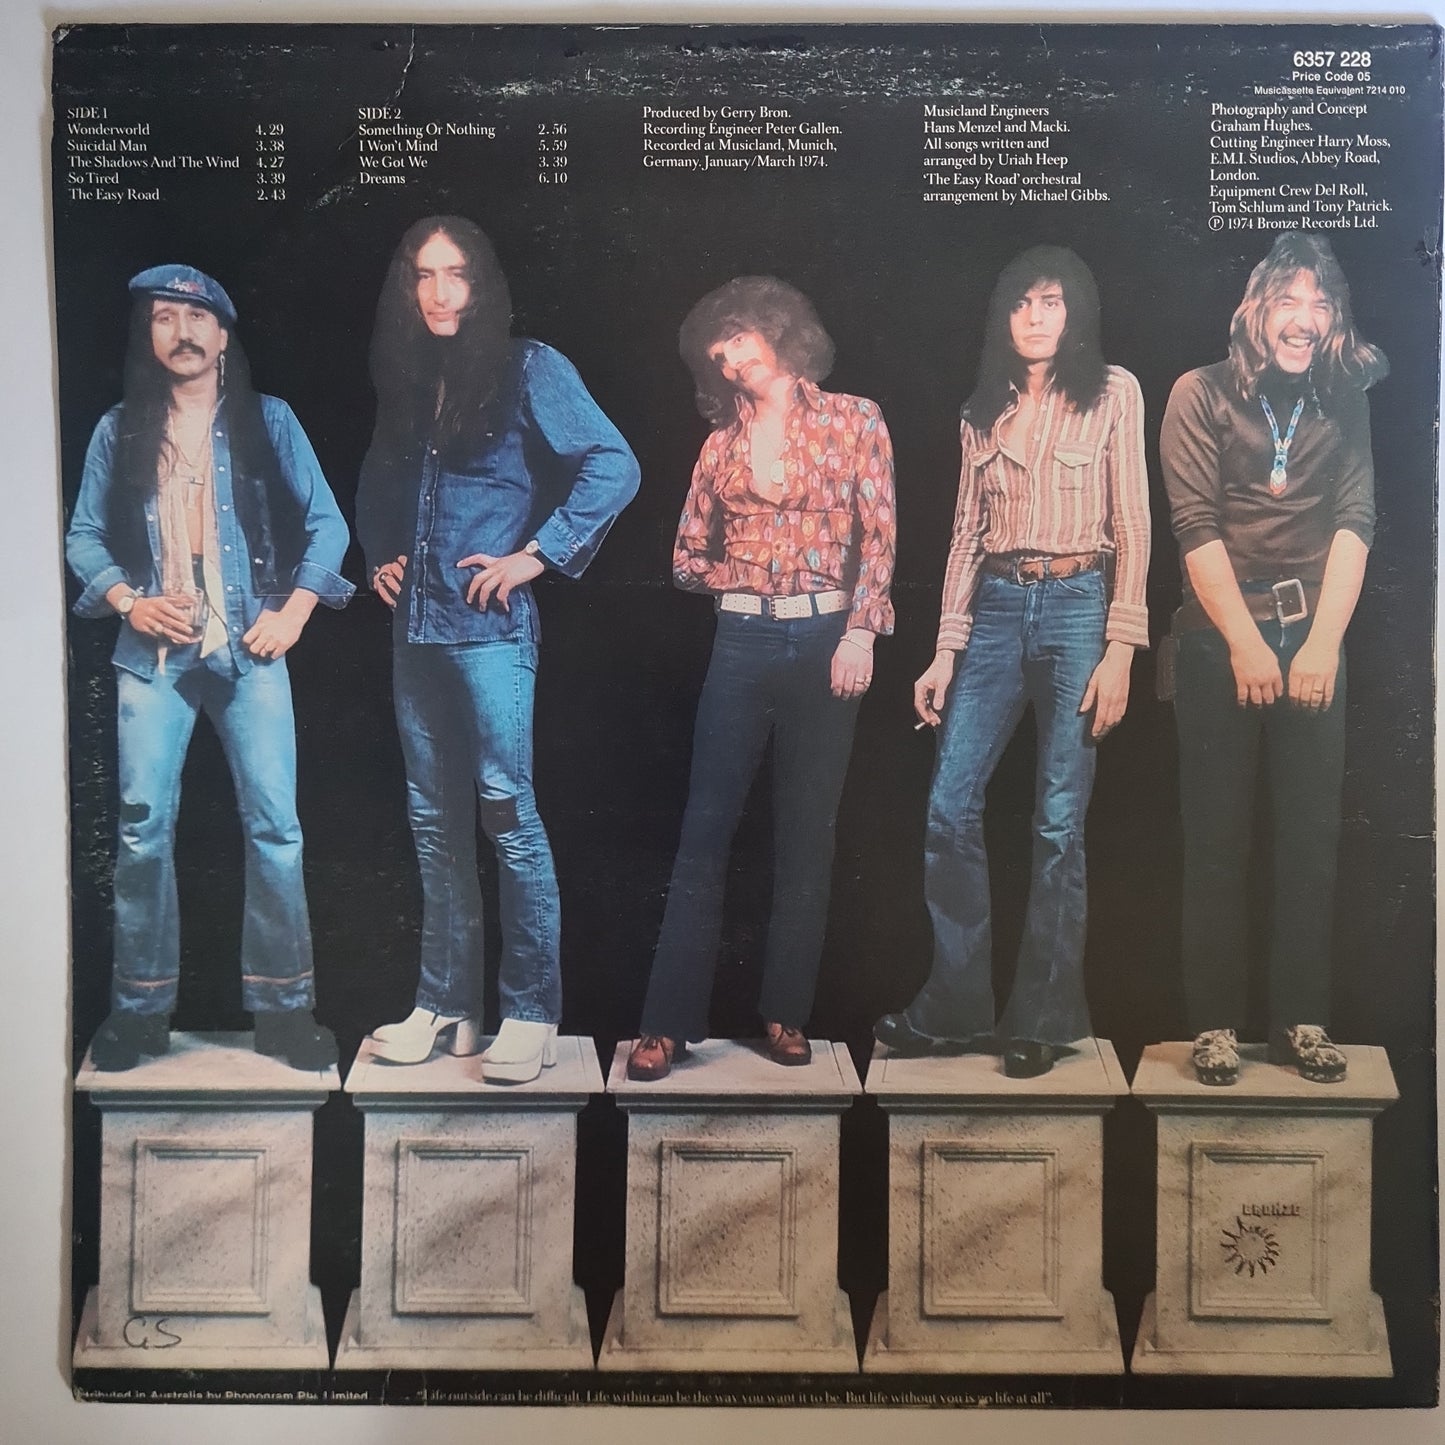 Uriah Heep – Wonderworld - 1974 - Vinyl Record